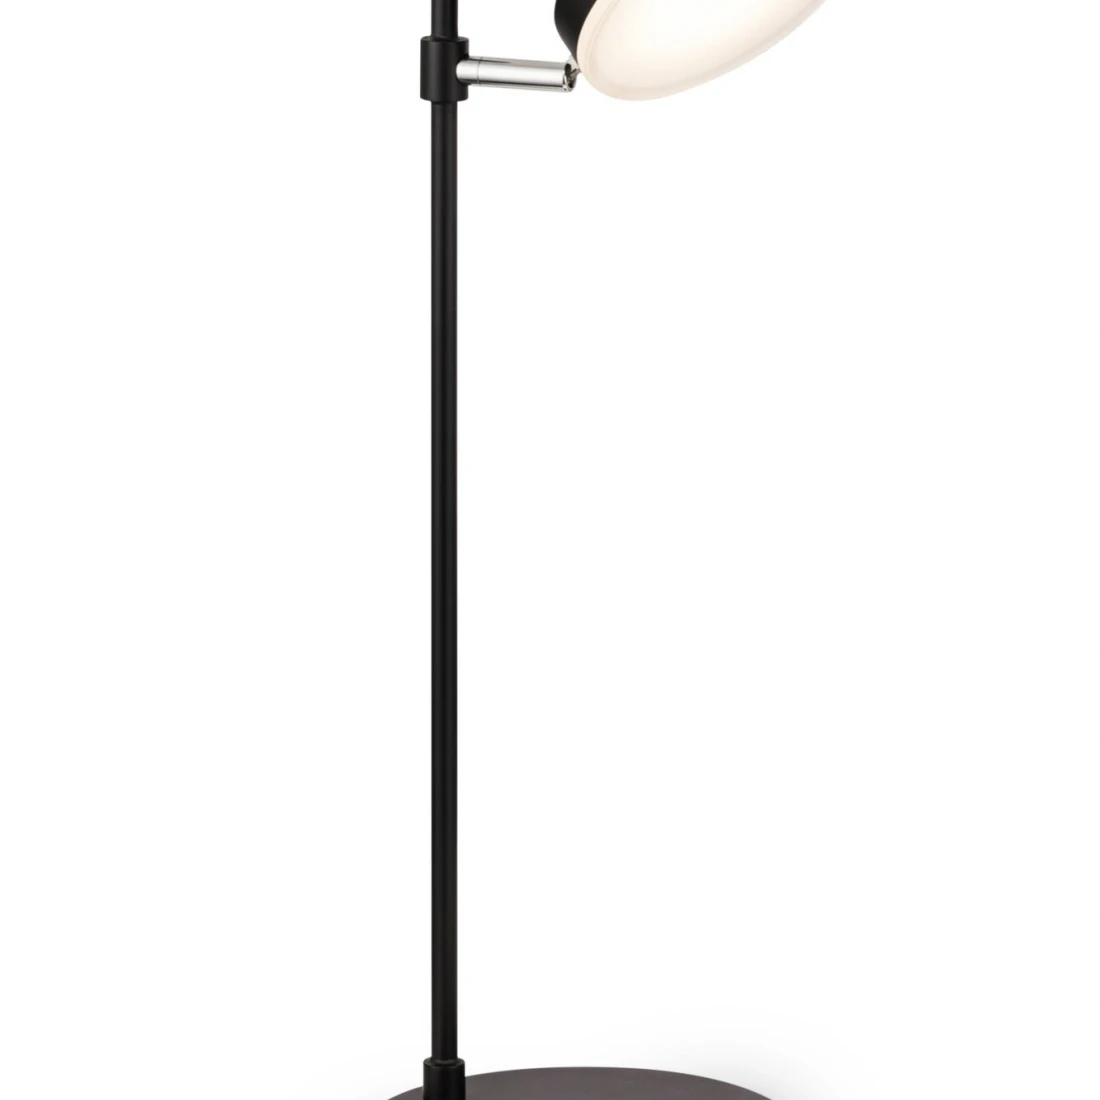 pamper castle nightmare Interior table lamp fad mod070tl l8b3k maytoni|LED Table Lamps| - AliExpress